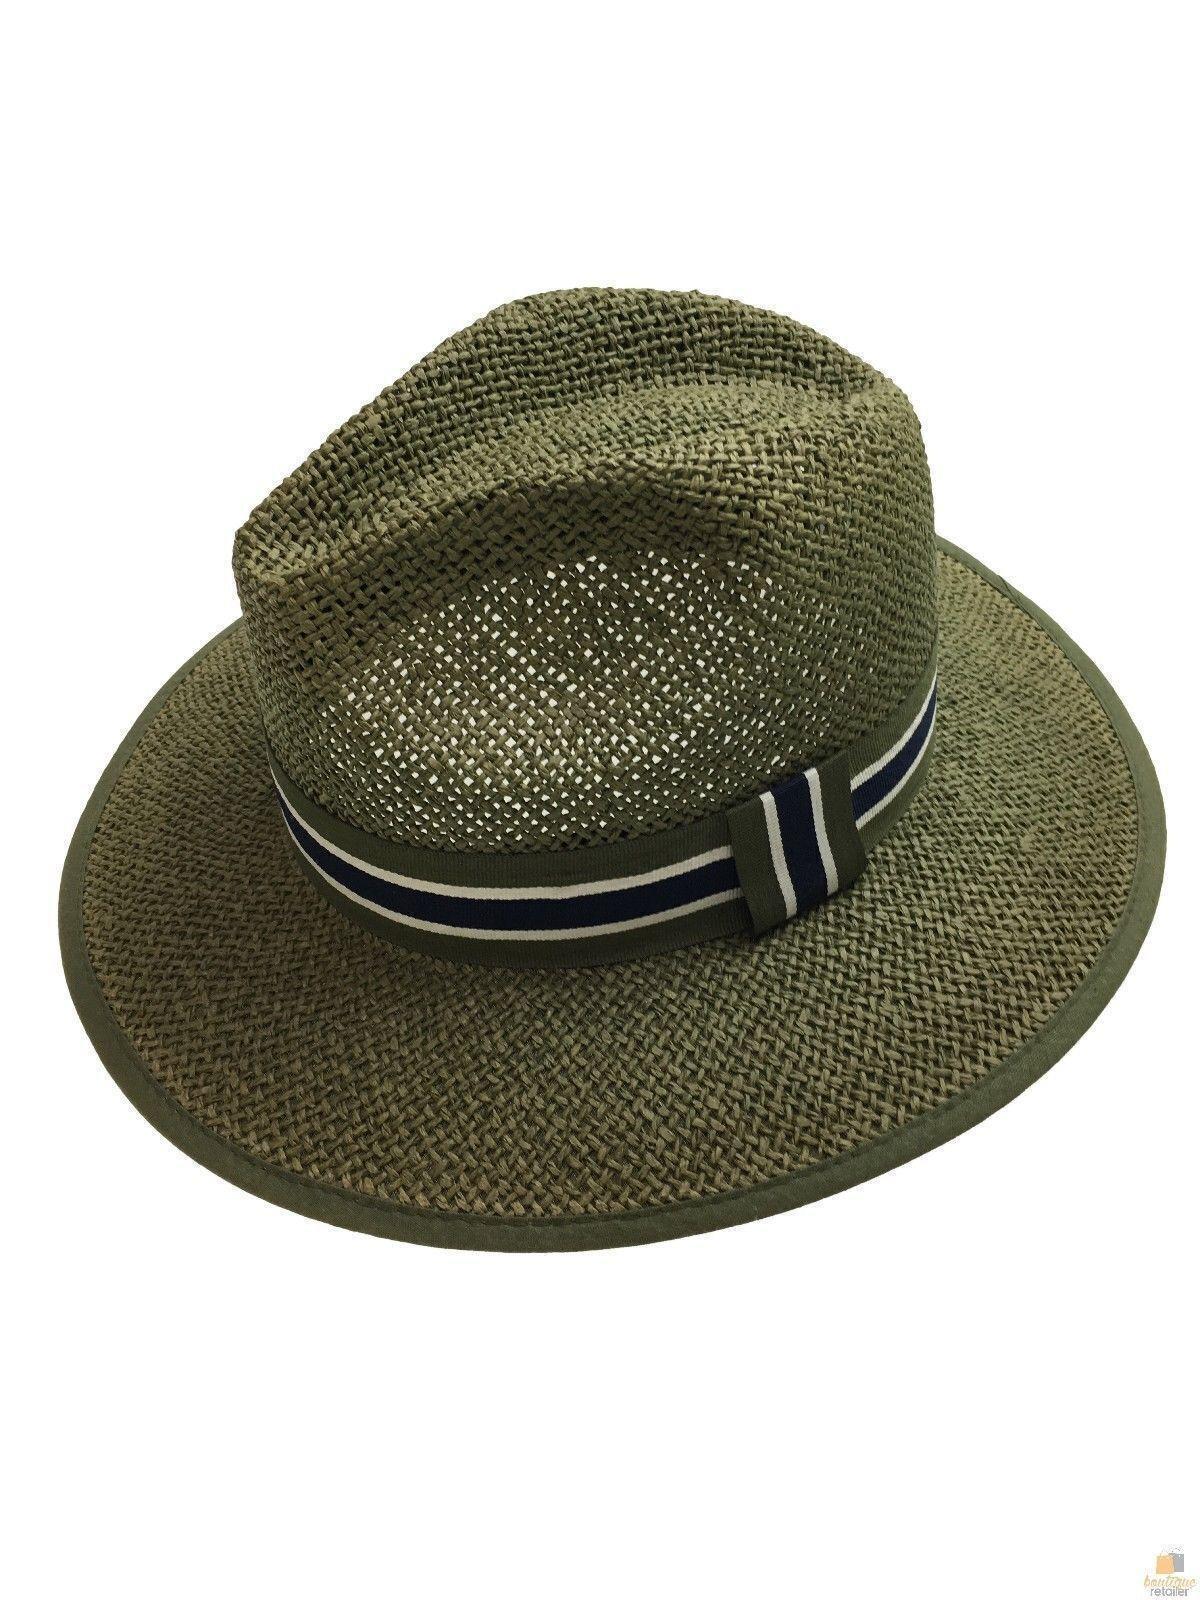 Natural Paper Panama Hat Fedora Summer Wide Brim Hat Sun Protection BR233 Sturdy - Medium (57cm)